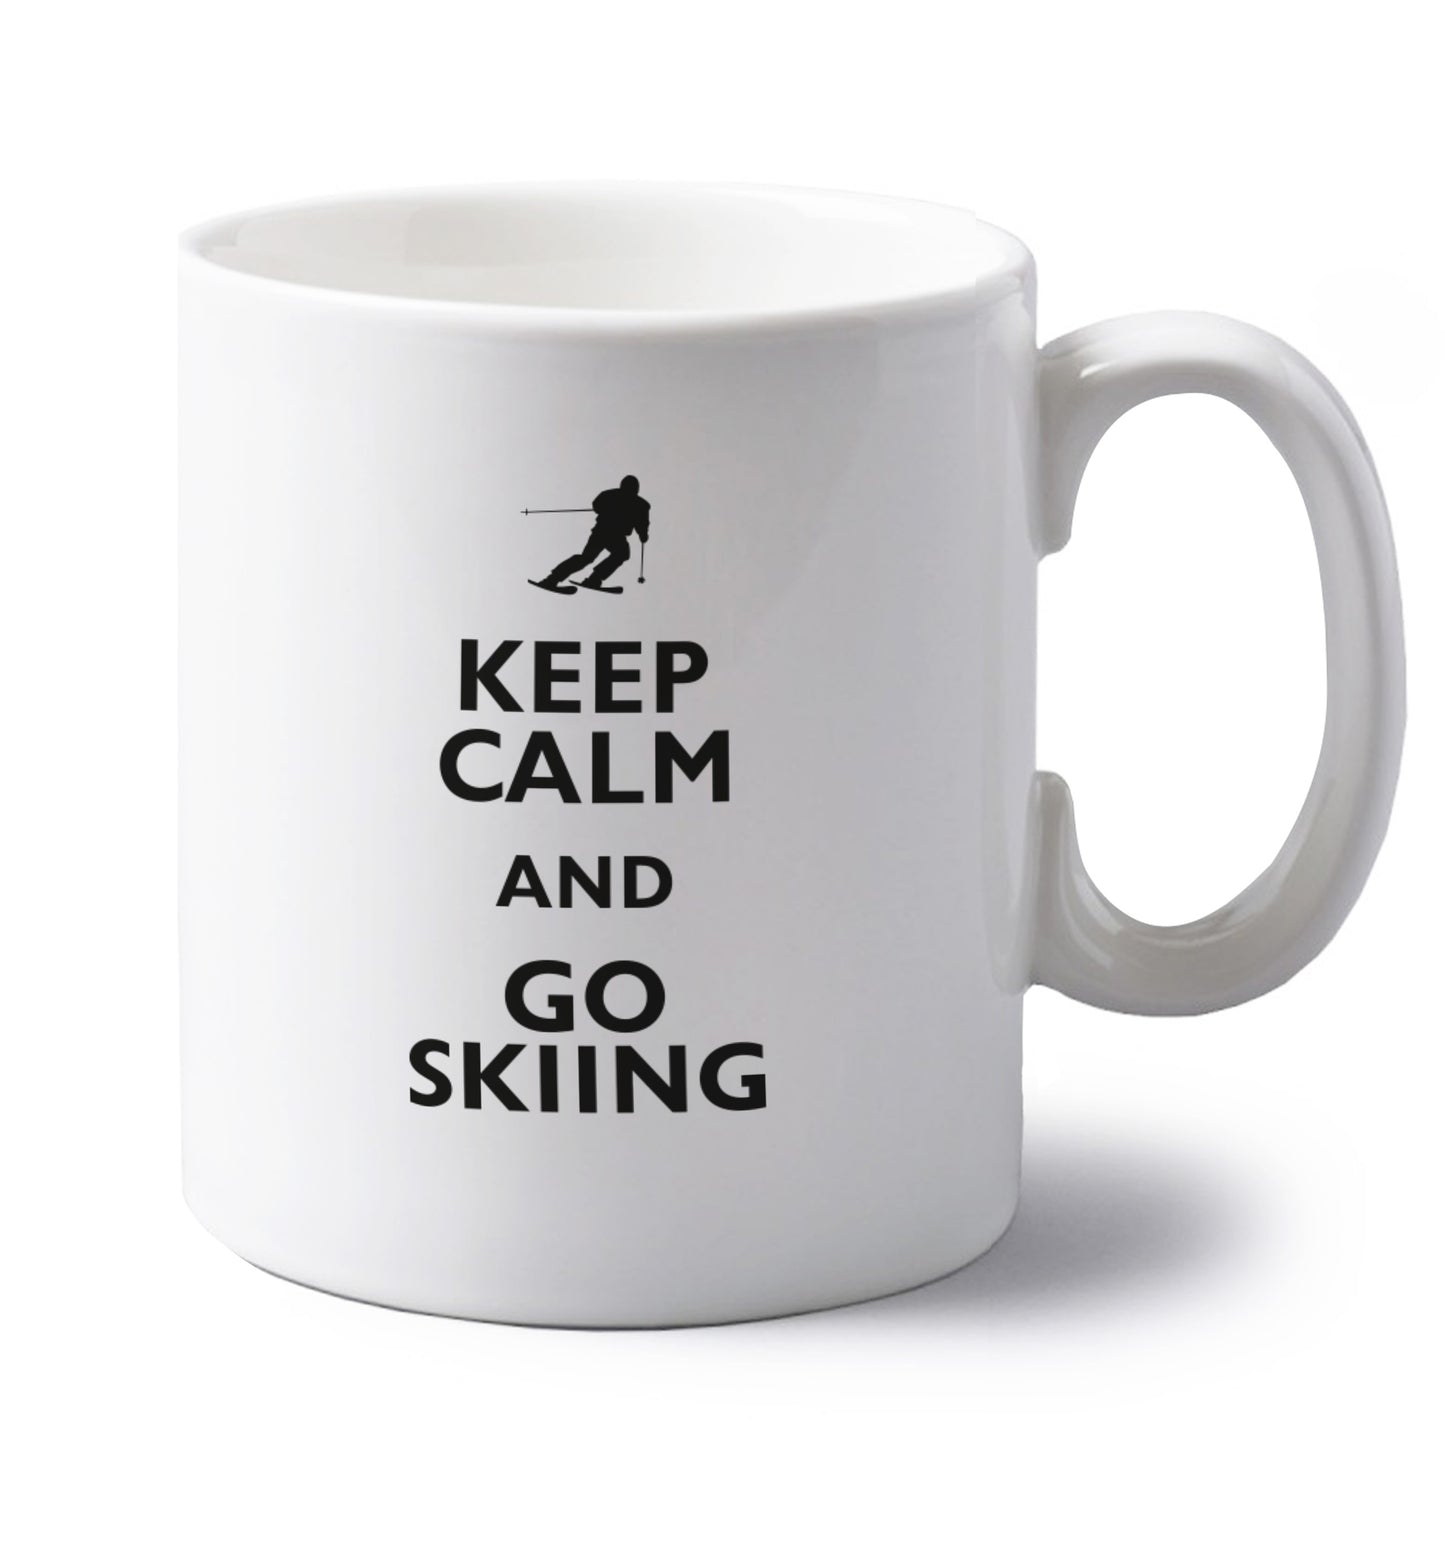 Keep calm and go skiing left handed white ceramic mug 